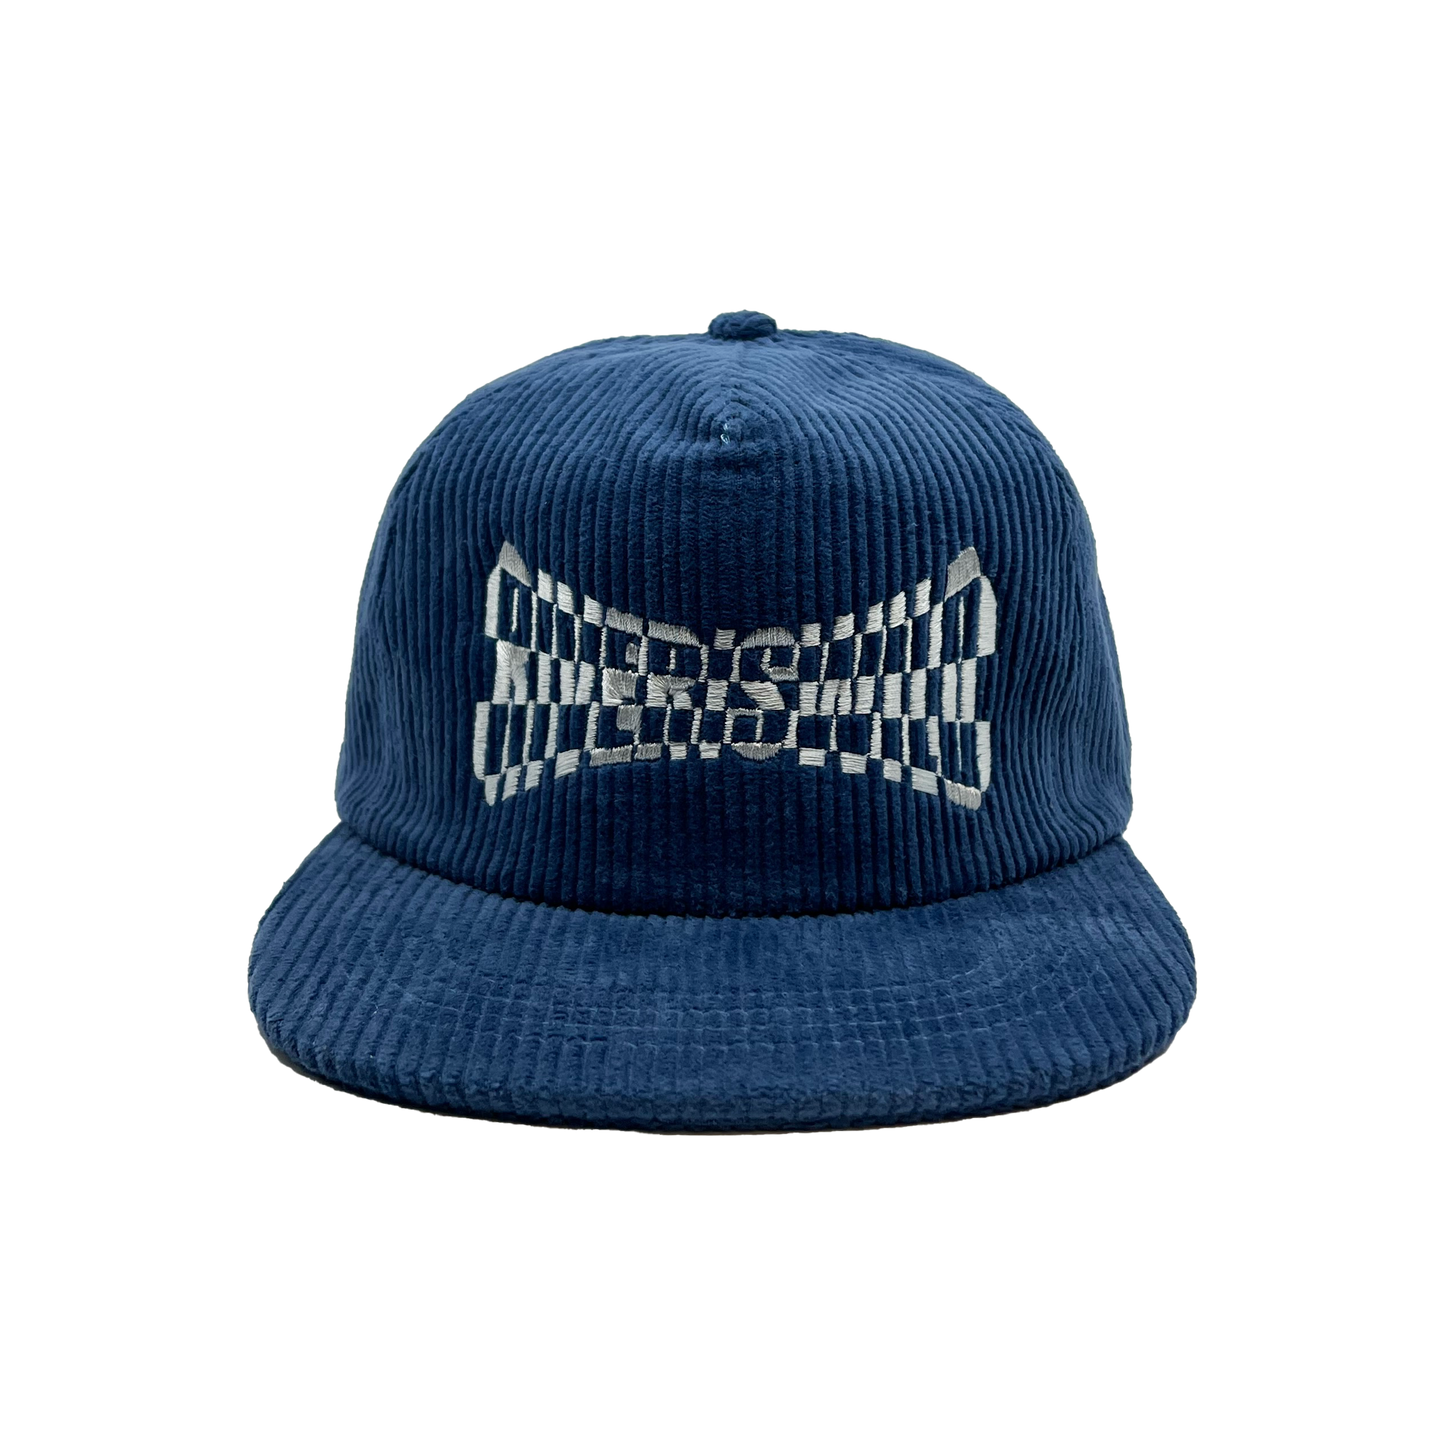 GRID LOGO CORD HAT (BLUE)